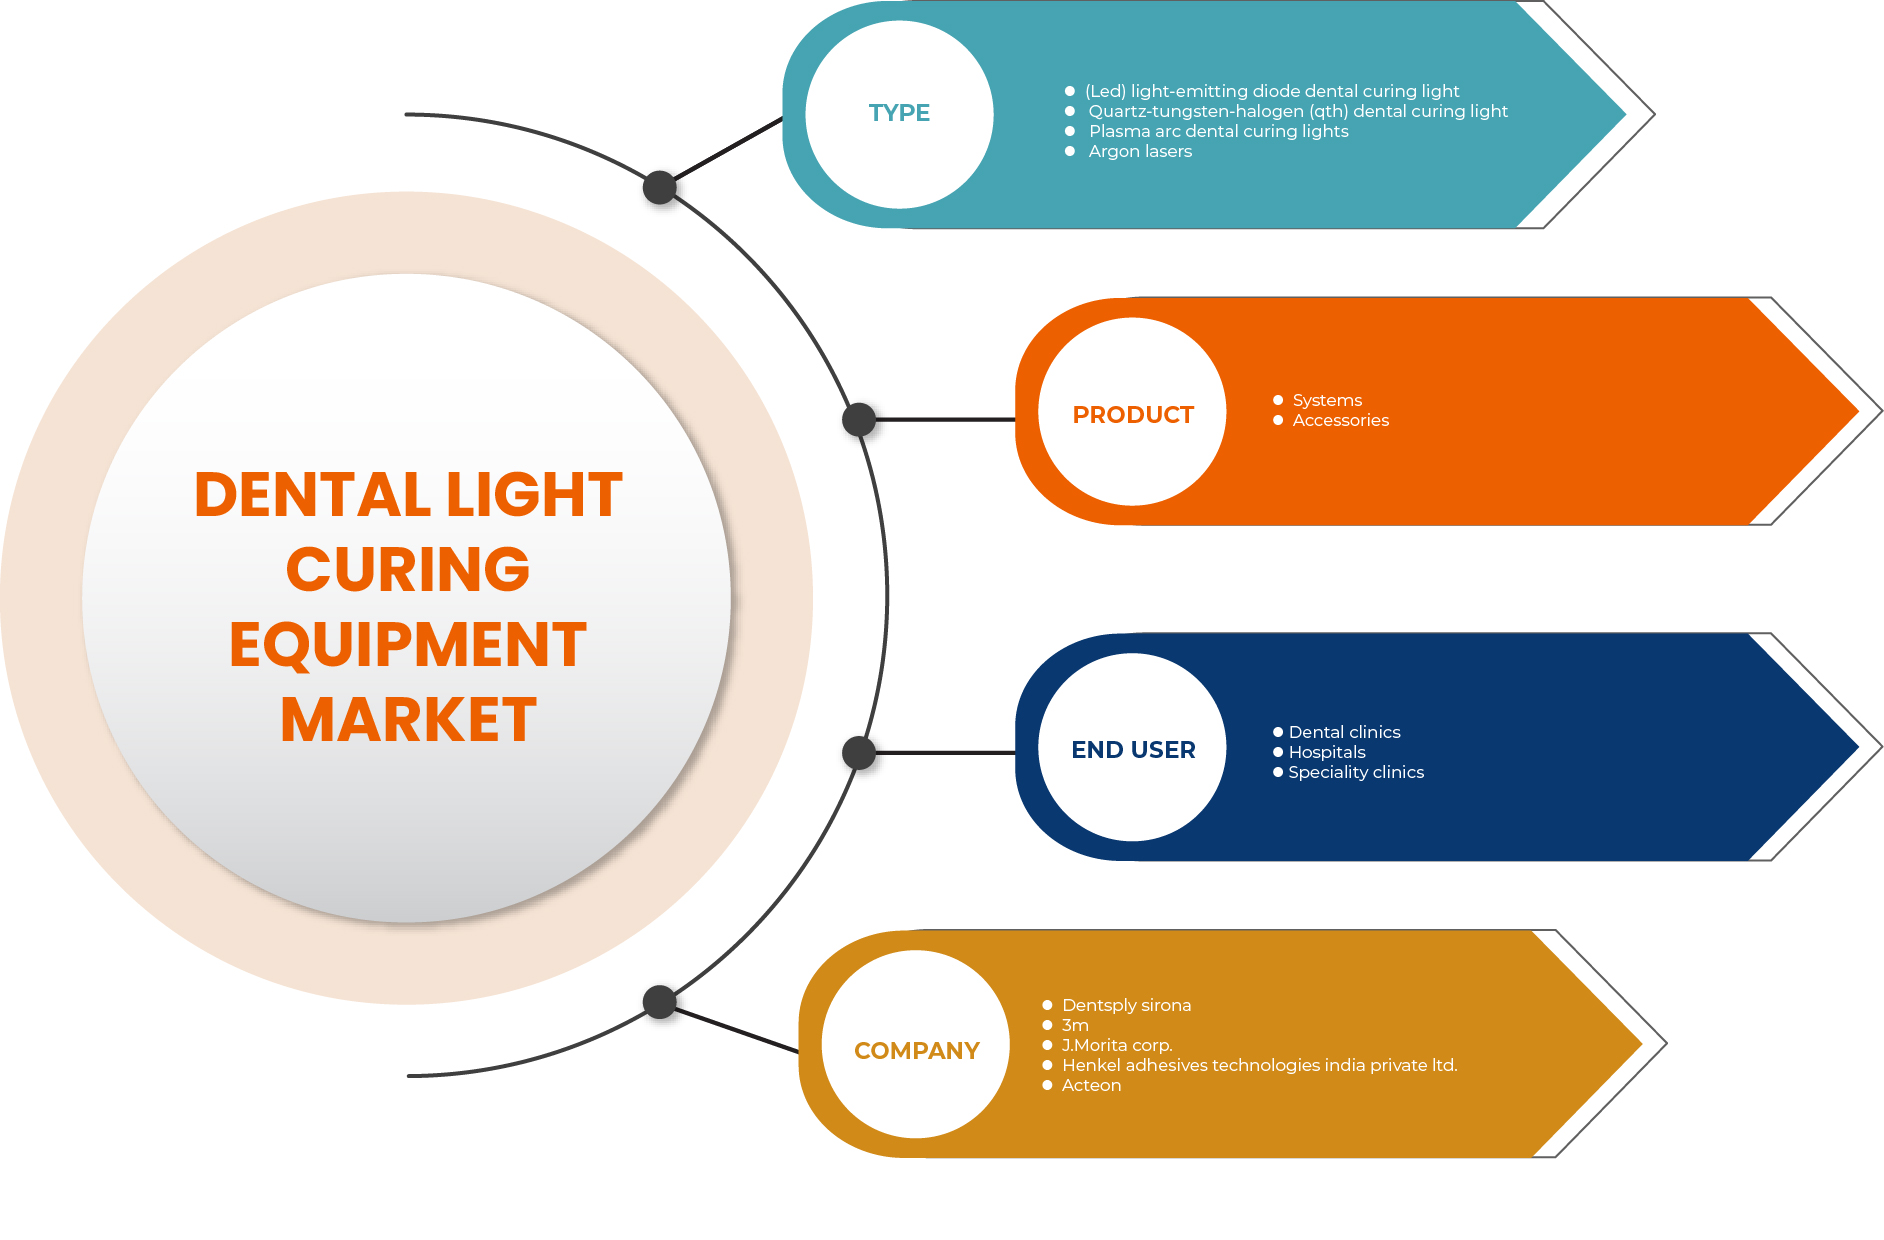 Asia-Pacific Dental Light Curing Equipment Market